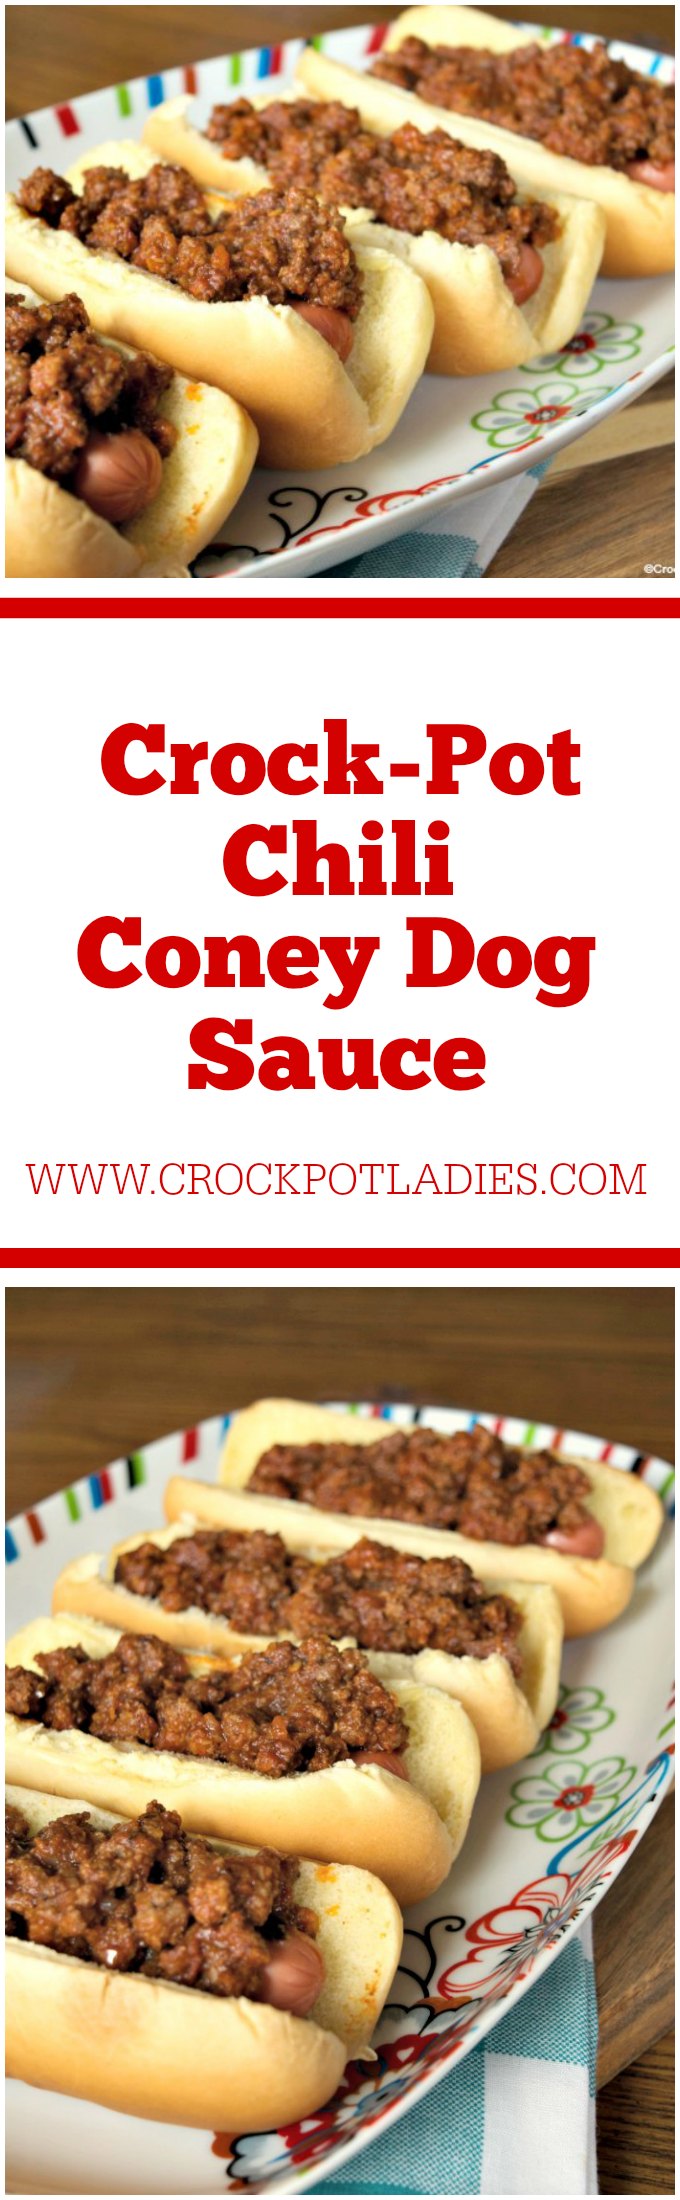 Crock-Pot Chili Coney Dog Sauce 